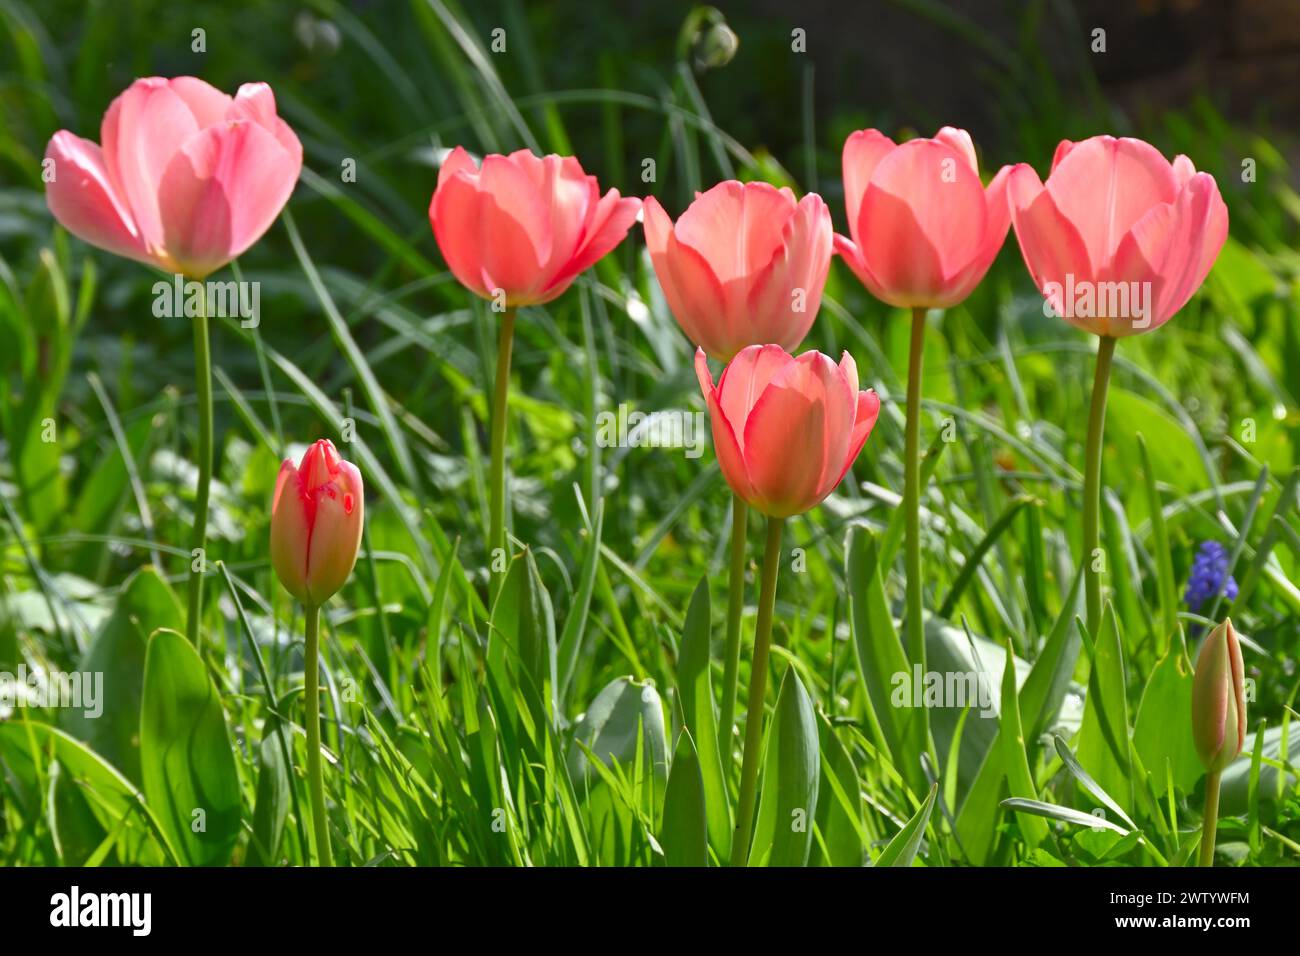 Newly opened pink spring flowers of tulip, tulipa Darwin Hybrid 'Mystick Van Eijk' growing in grass in UK garden March Stock Photo